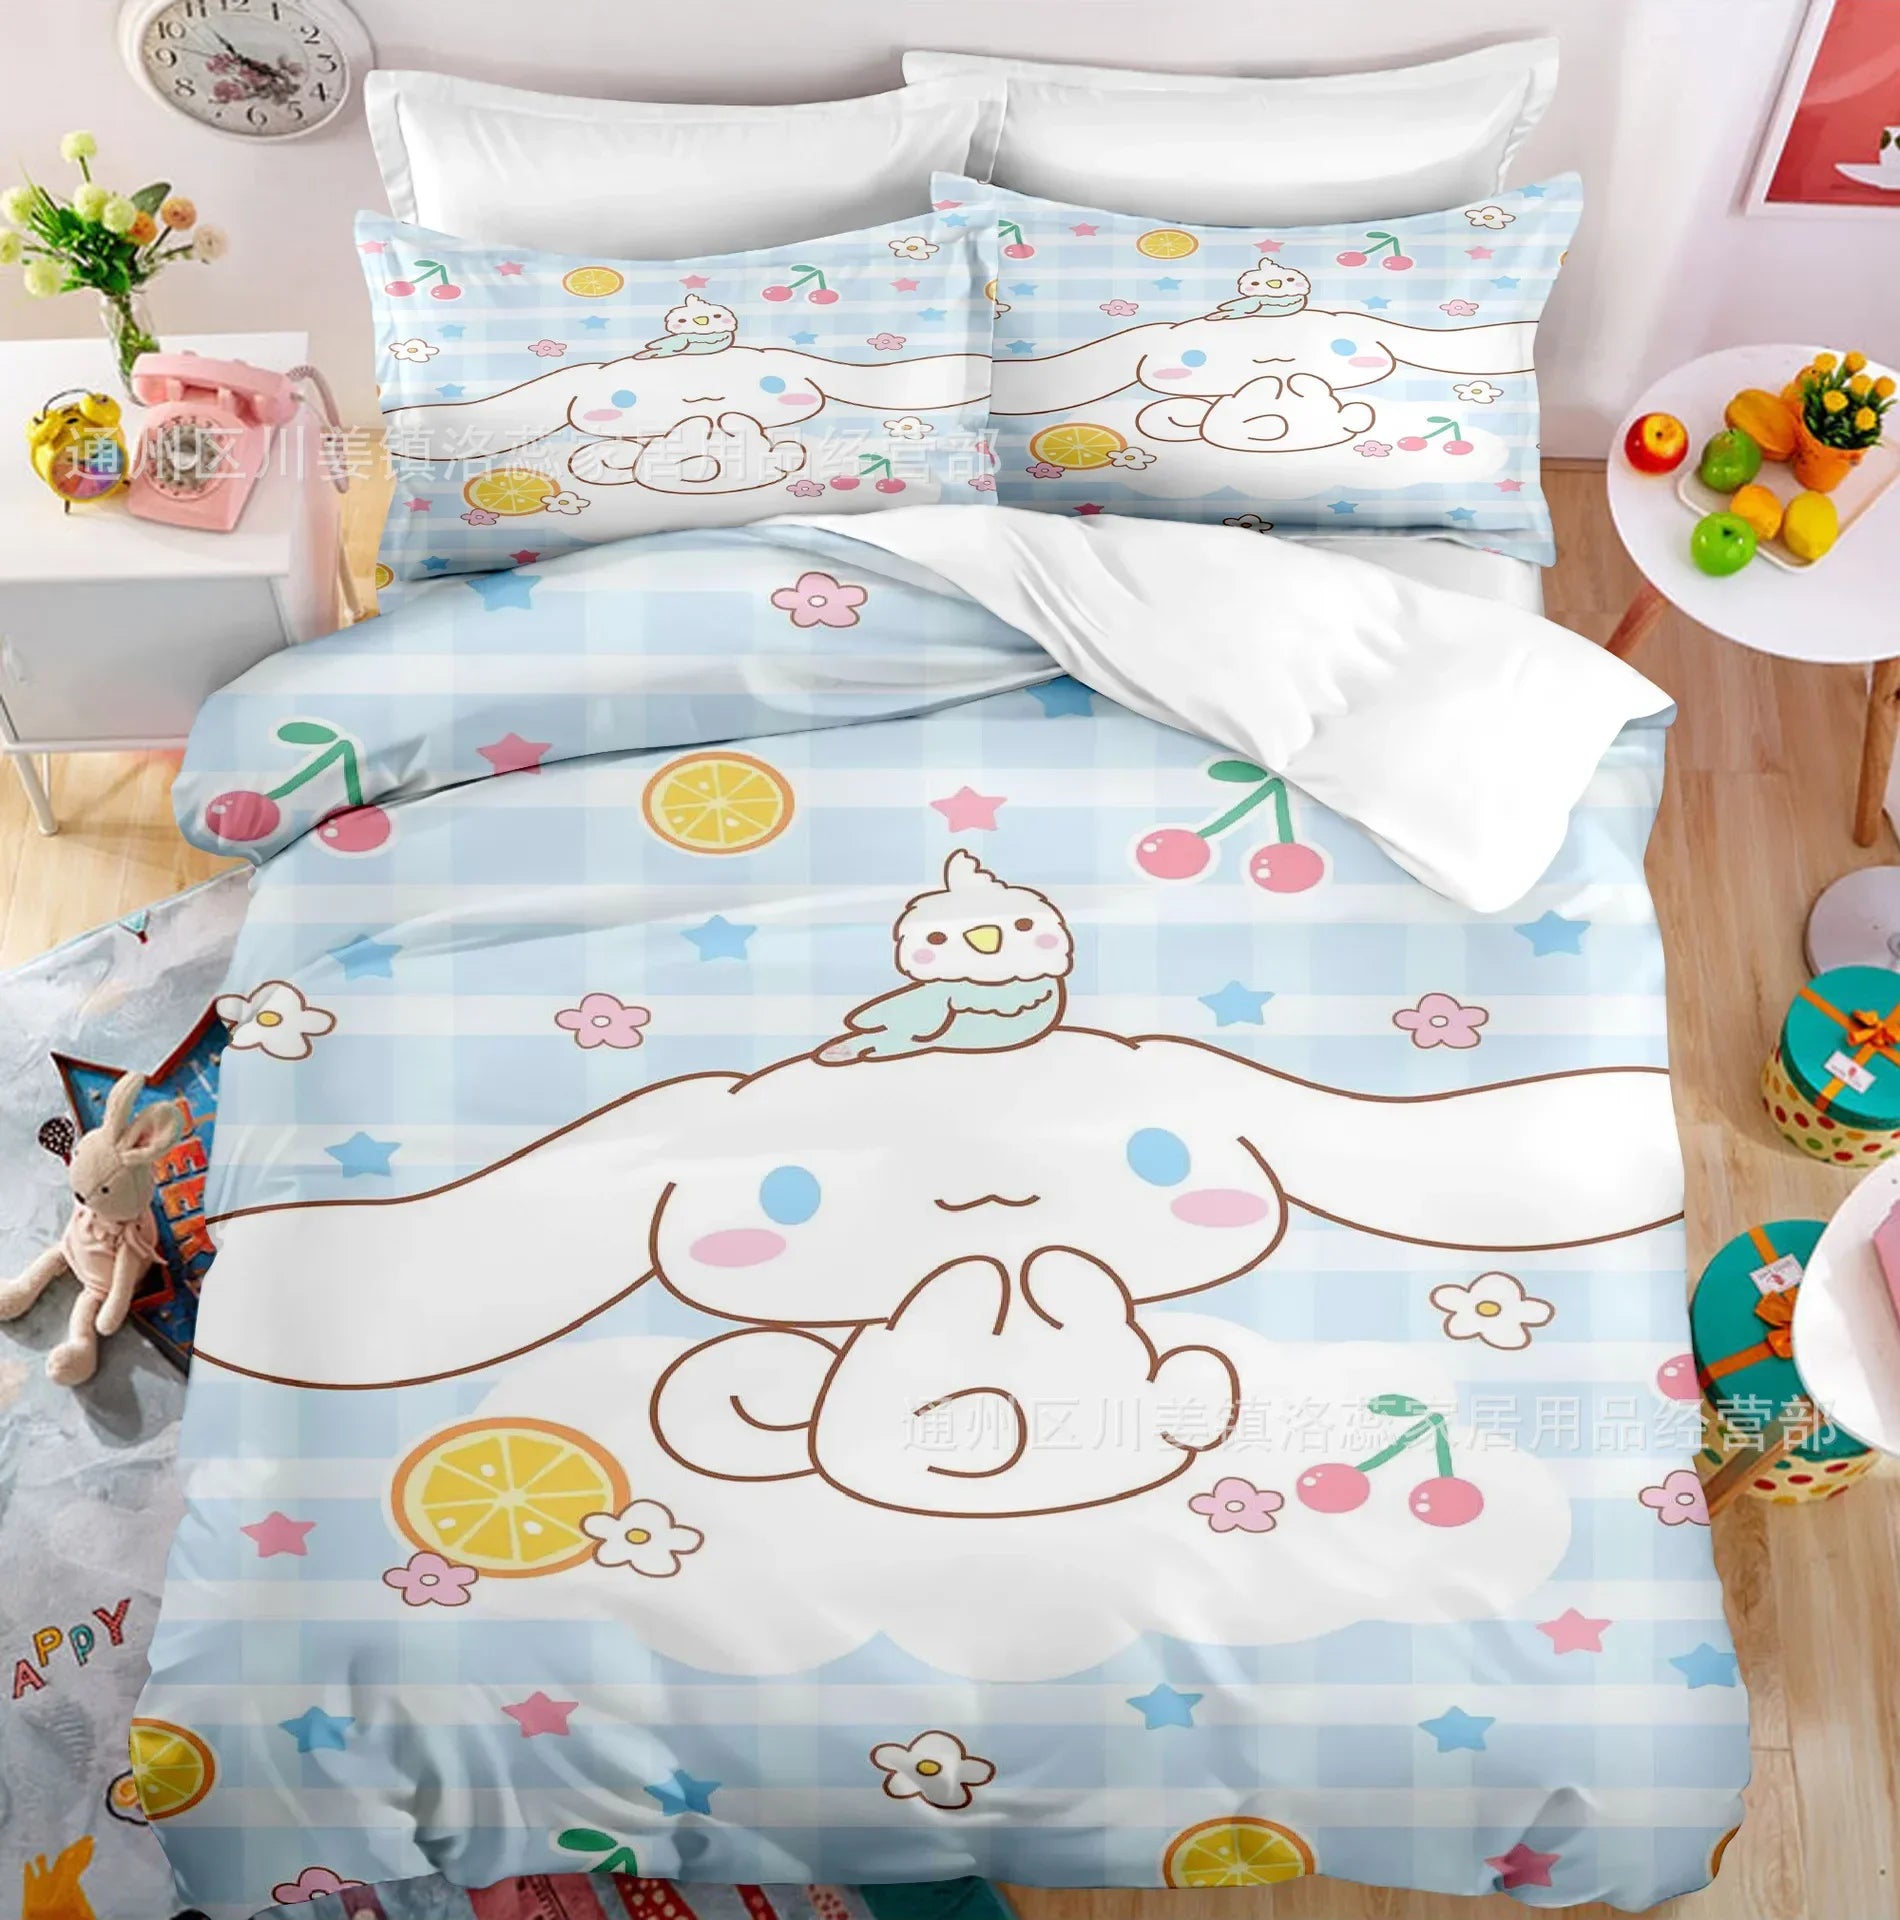 Sanrio Kuromi Series Duvet Cover Sanding Kit Digital Printing Cartoon Anime Cute Bed Home Two-piece Set Three-piece Set ShopOnlyDeal